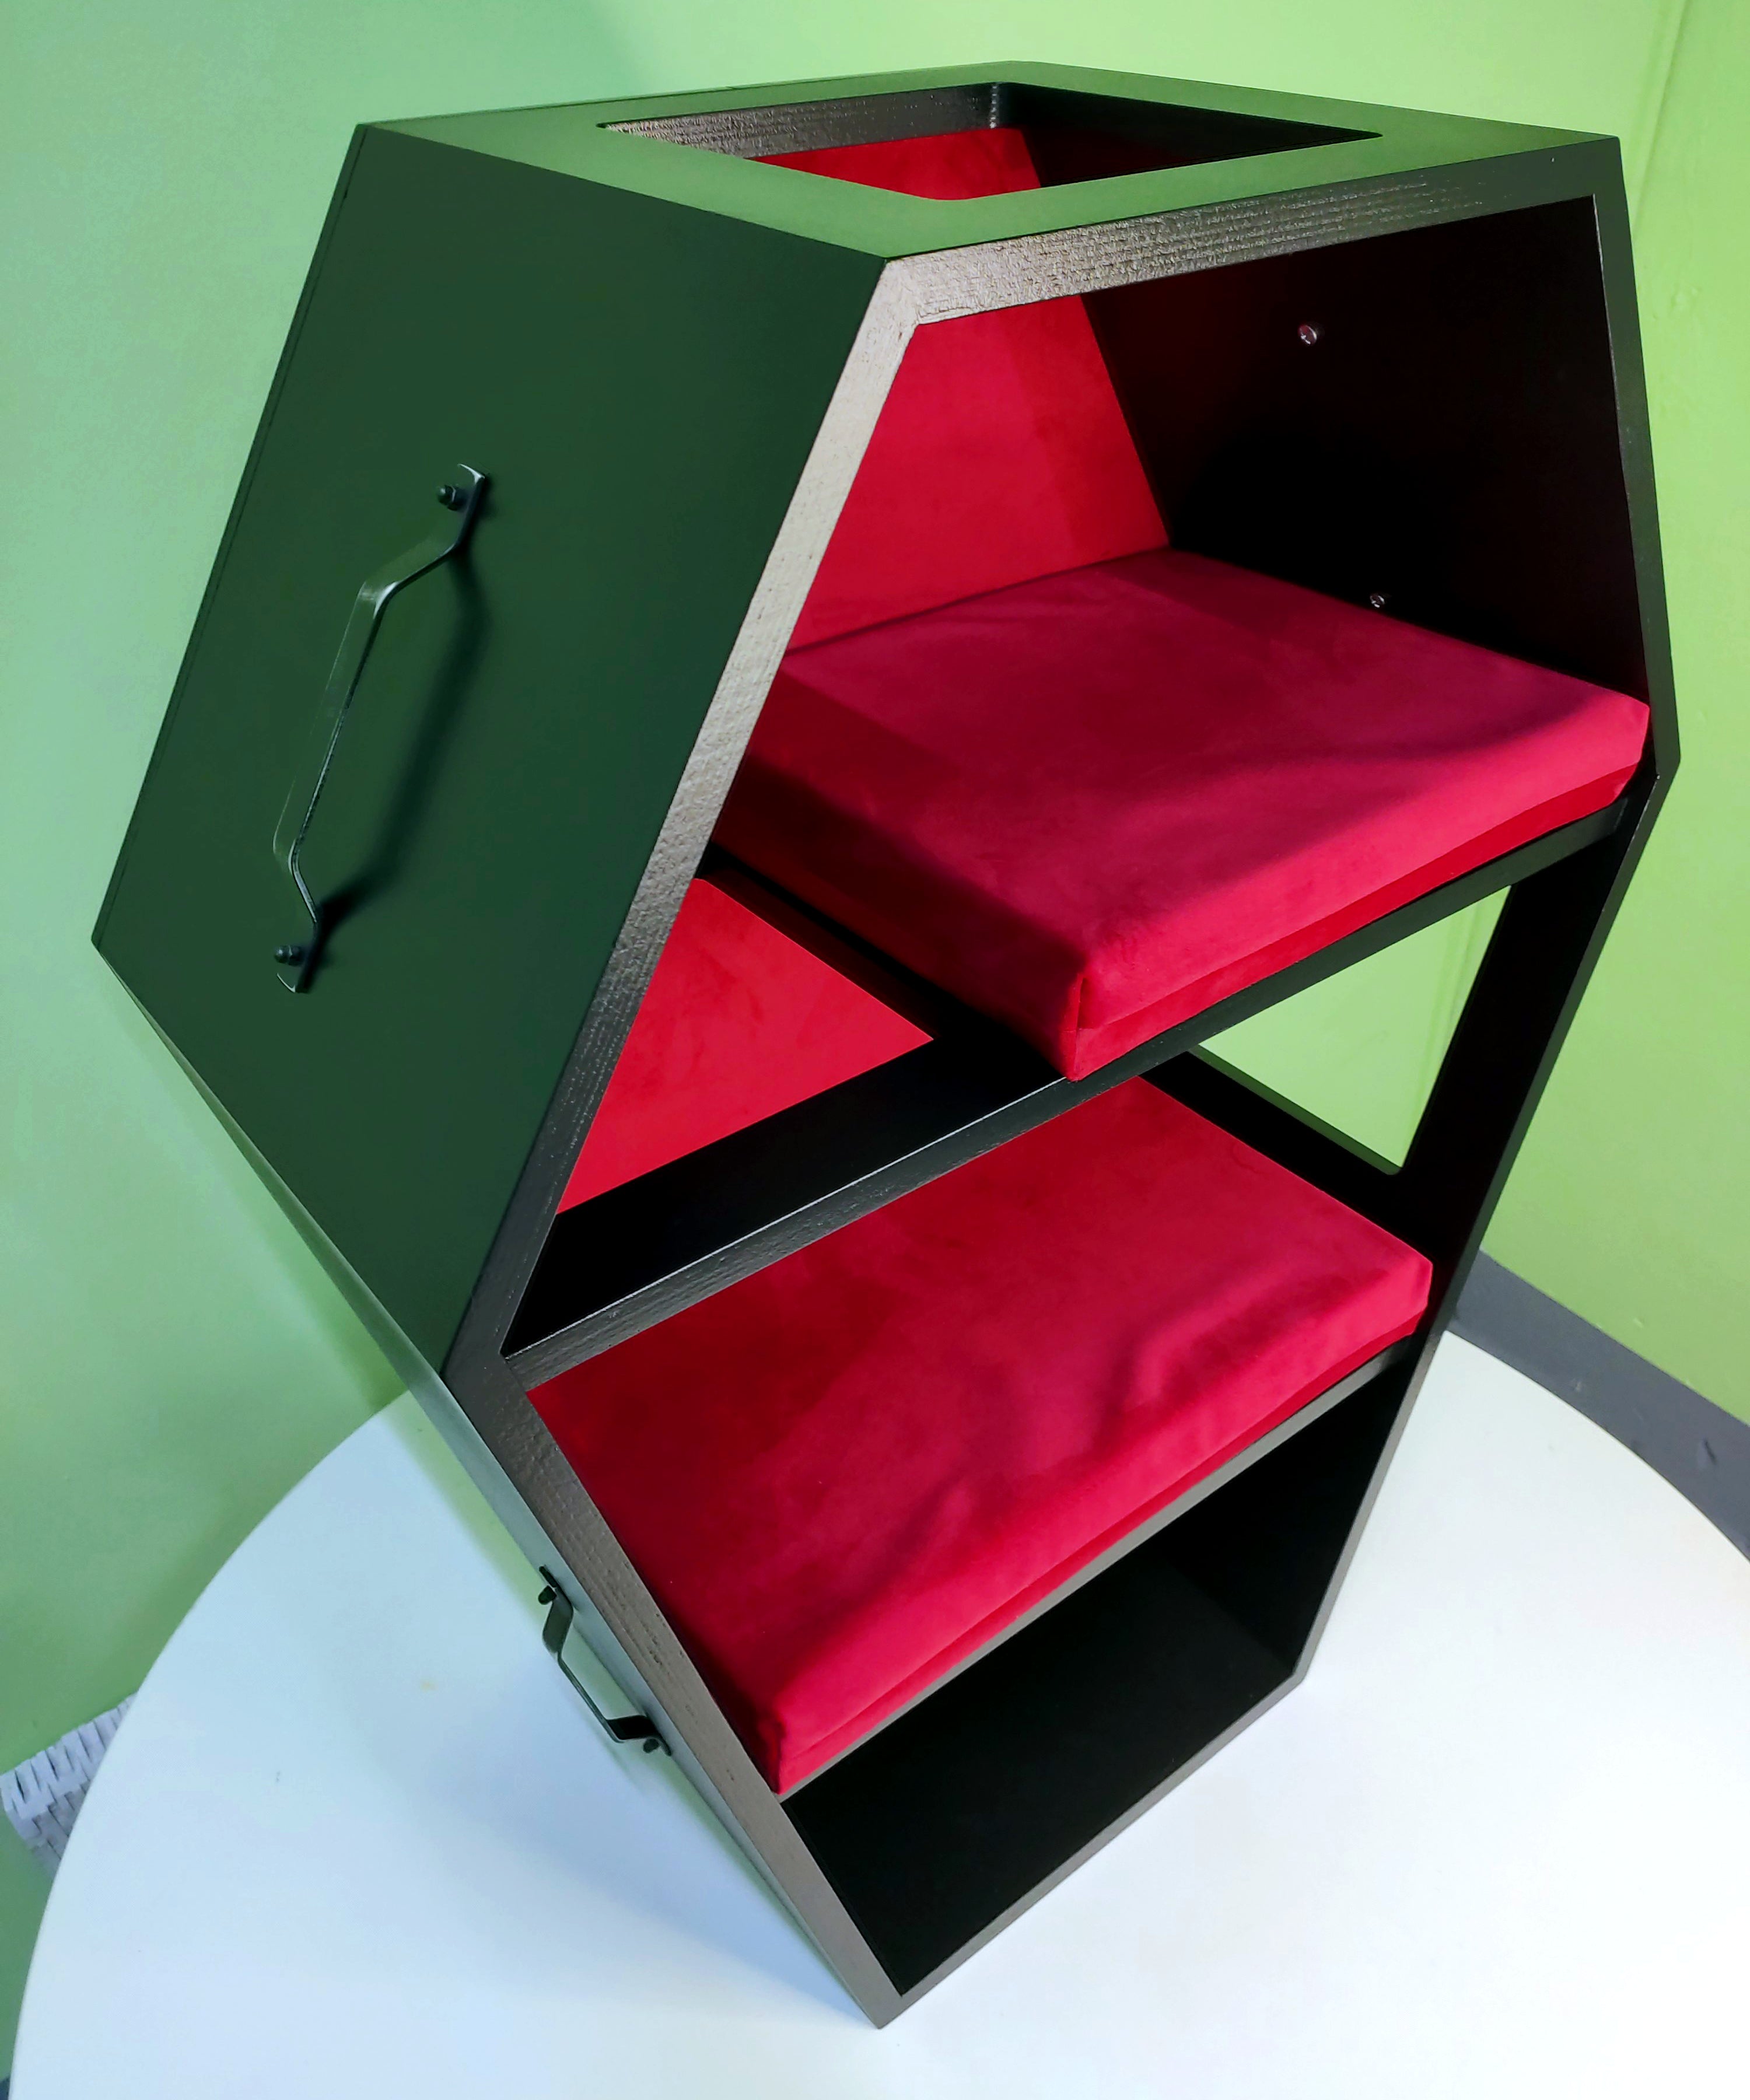 Big Cat Wall Shelf Bed Box Halloween - Wally Vampurrra - Scratchy Things Premium Pet Furniture